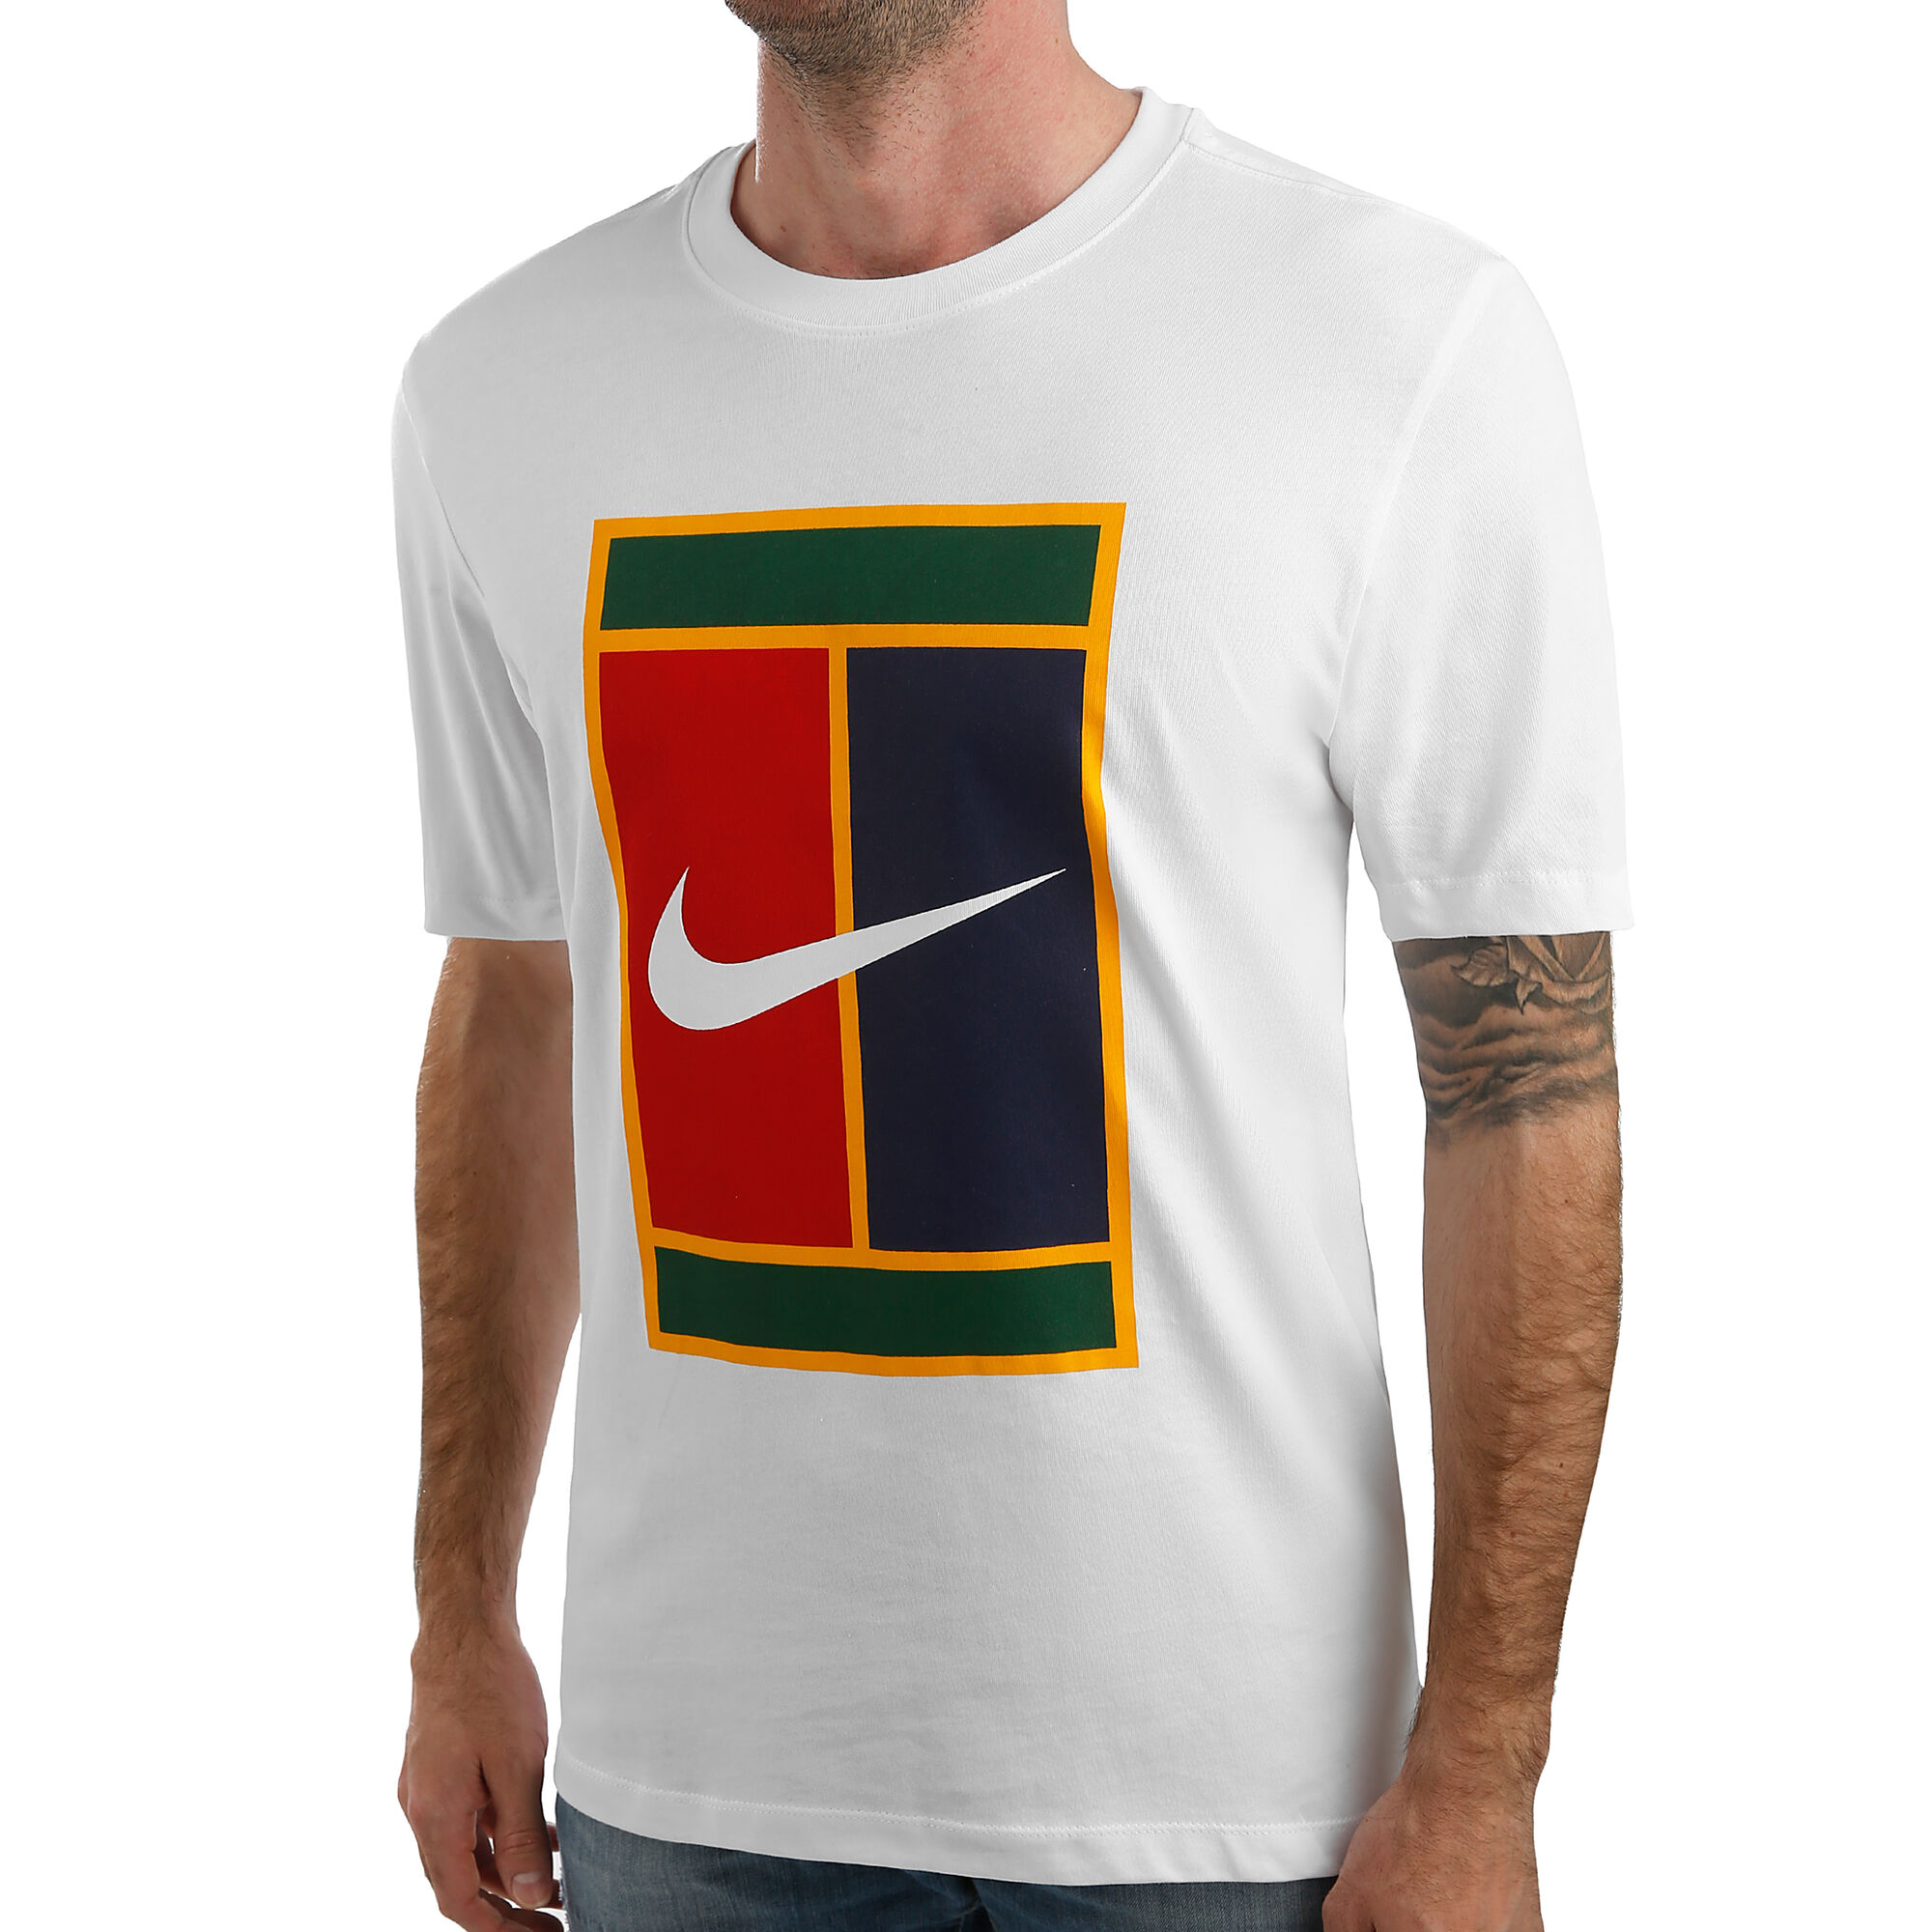 Nike Court Logo Camiseta Manga Corta Hombres - Blanco, Amarillo compra online |